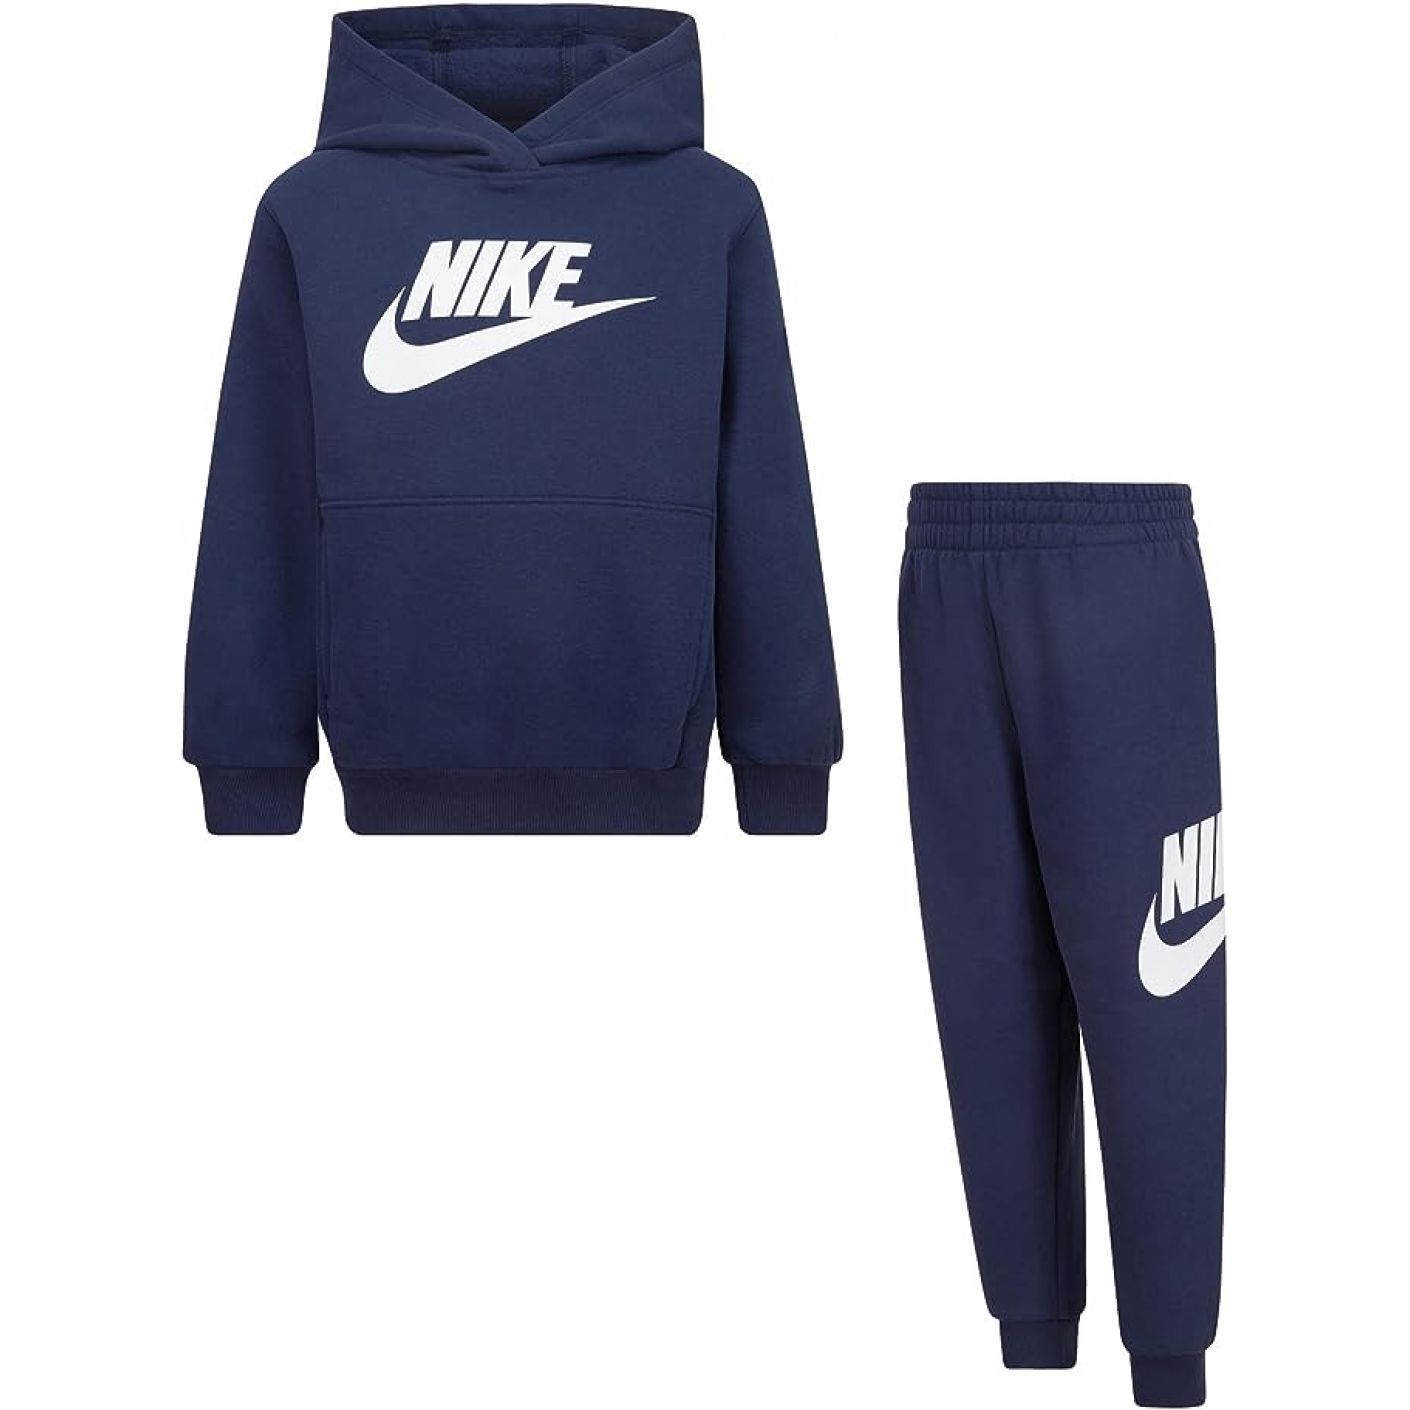 Nike Blue Fleece Club Suit for Children